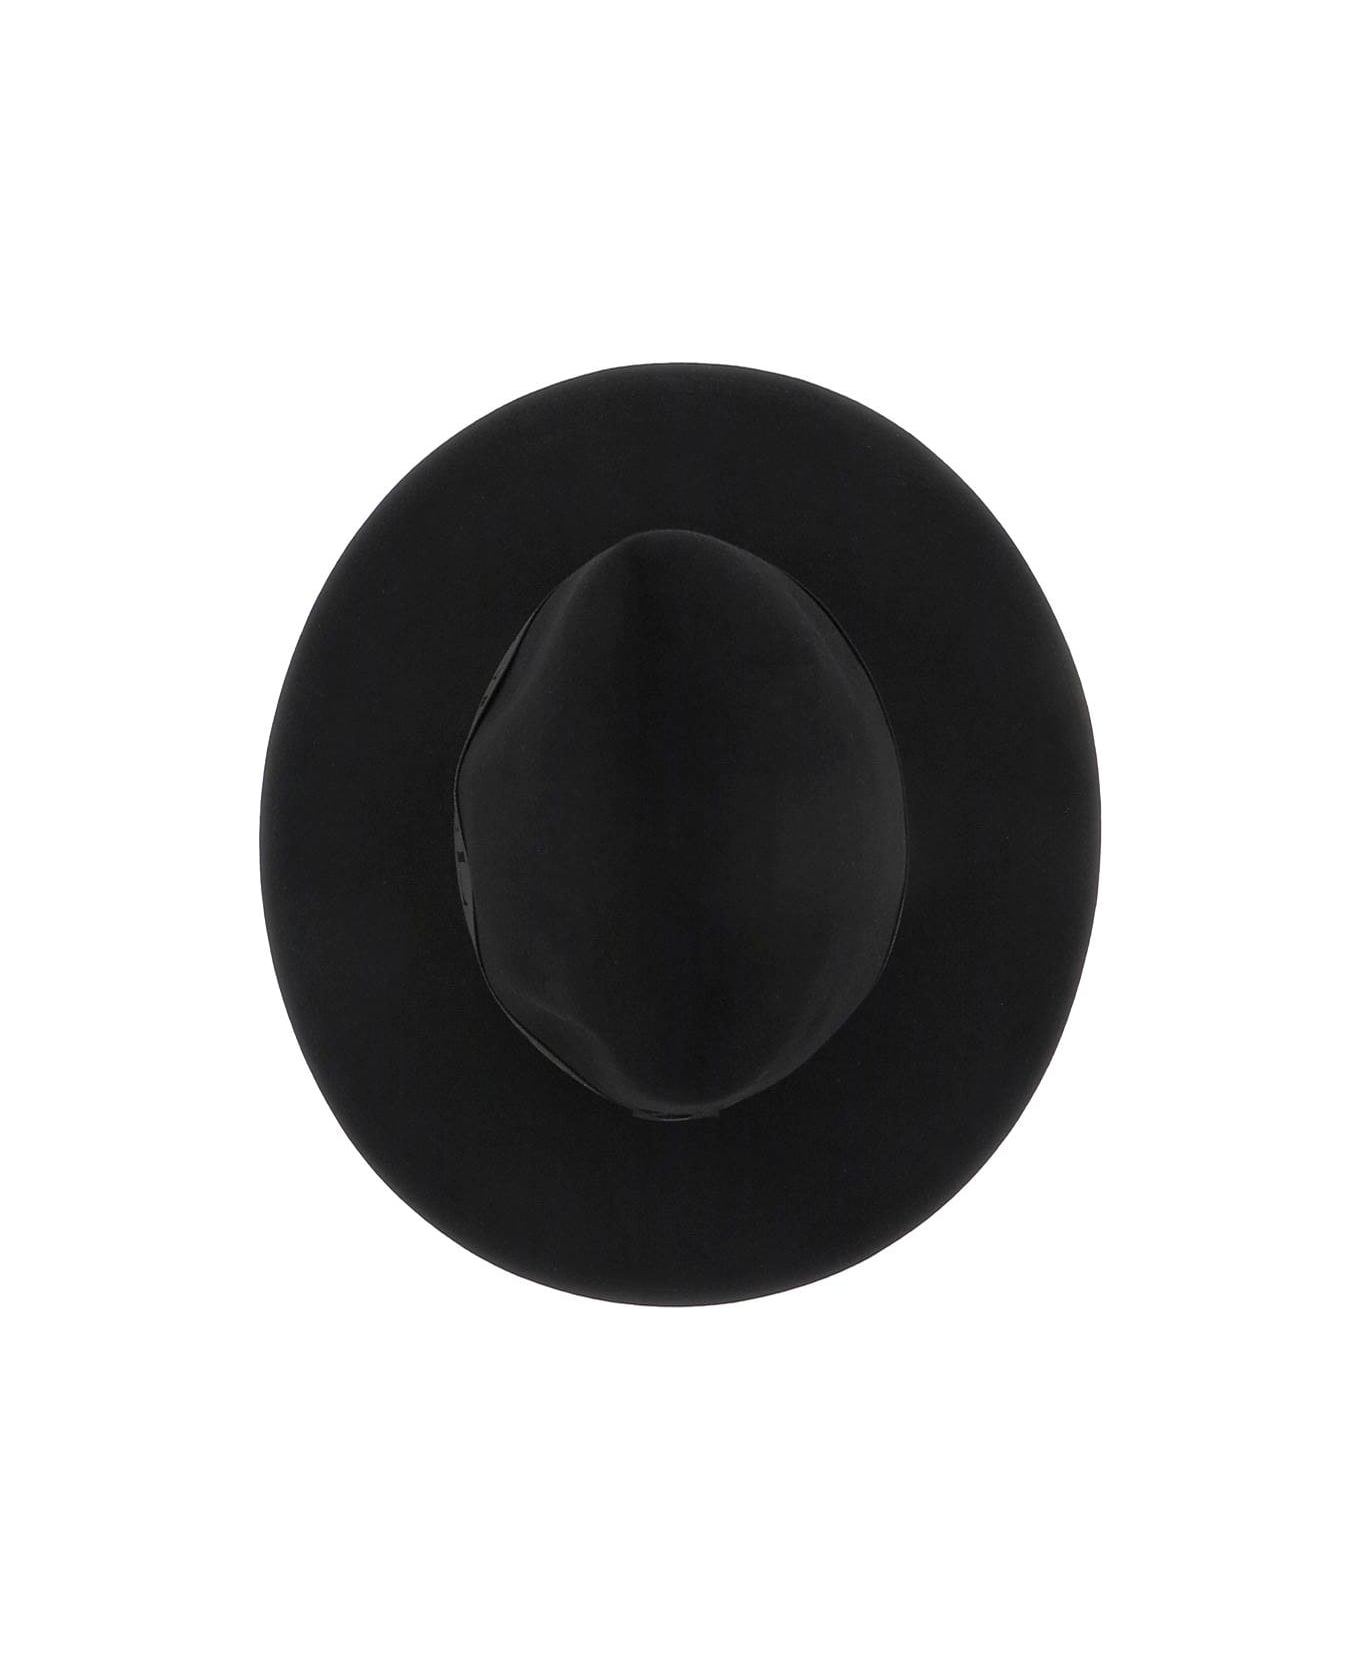 Maison Michel 'zango' Felt Fedora Hat - BLACK (Black) ヘアアクセサリー